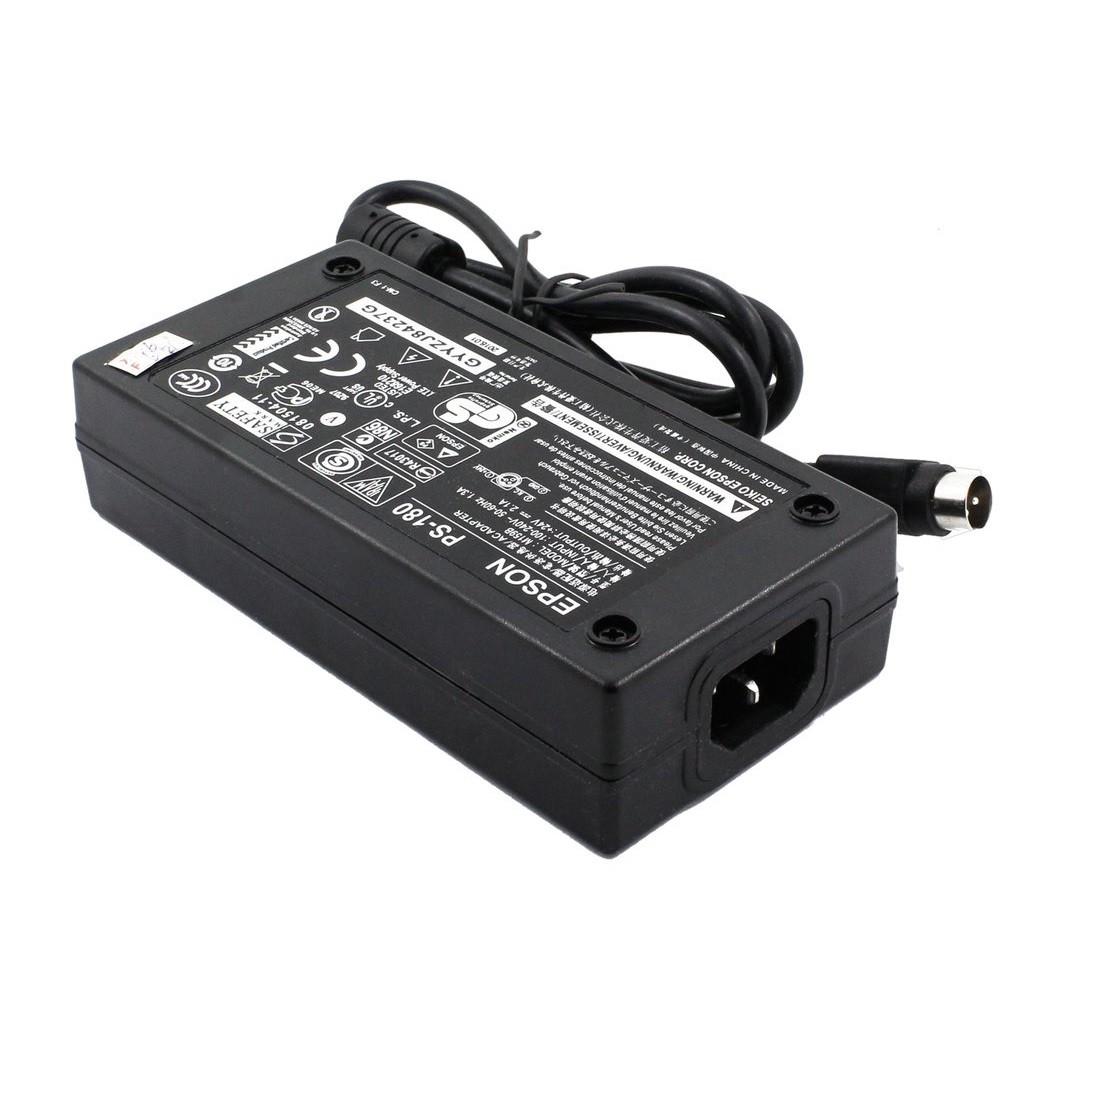 AC Adapter For TM-T81 TM-T82 TM-T88 TM-U220 TM-M30 Printer (2186771 2129894 2166000 2148463 Printer Point